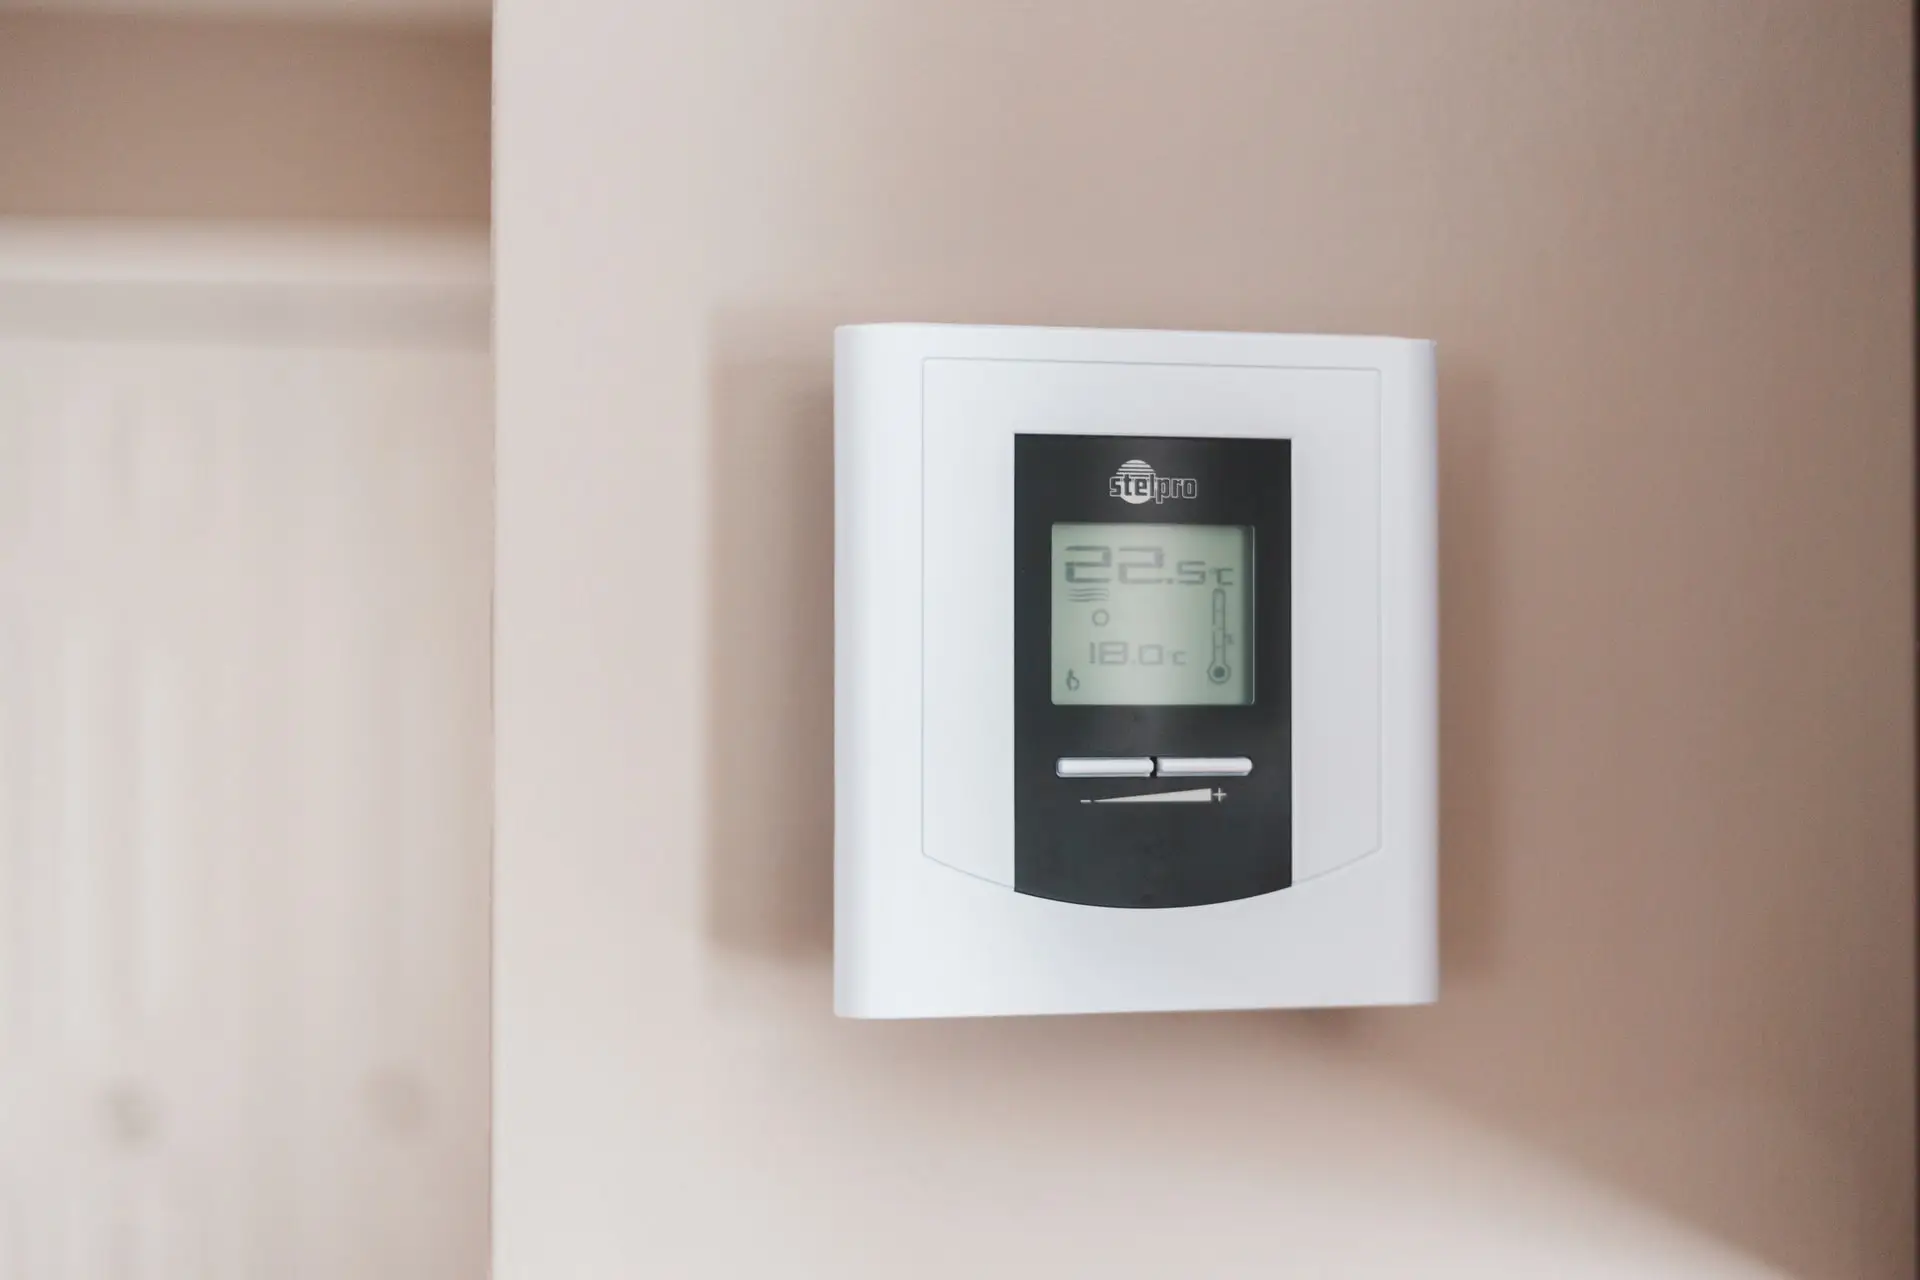 Régulation chauffage central thermostat illustration